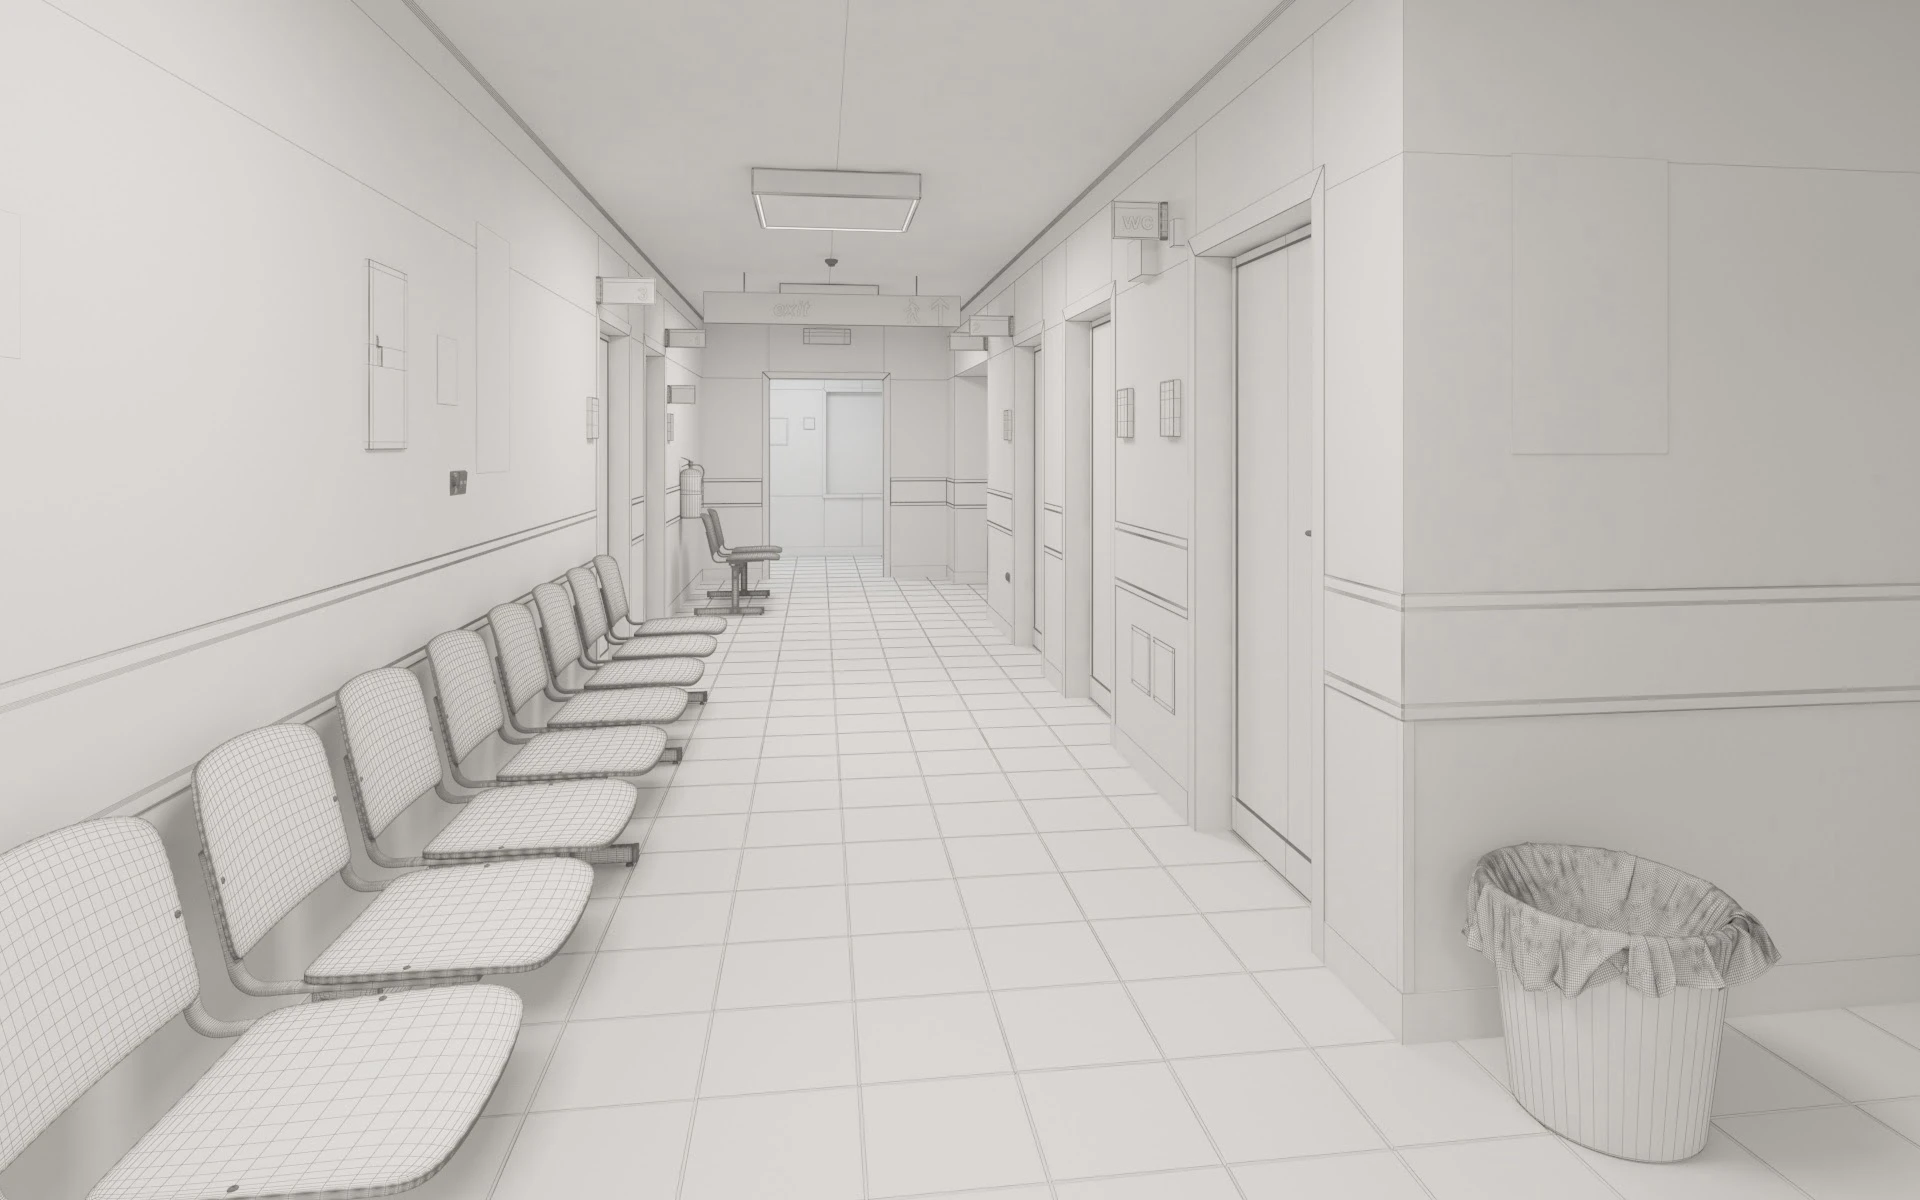 019 Hospital Hallway Corridor 3D Model_010